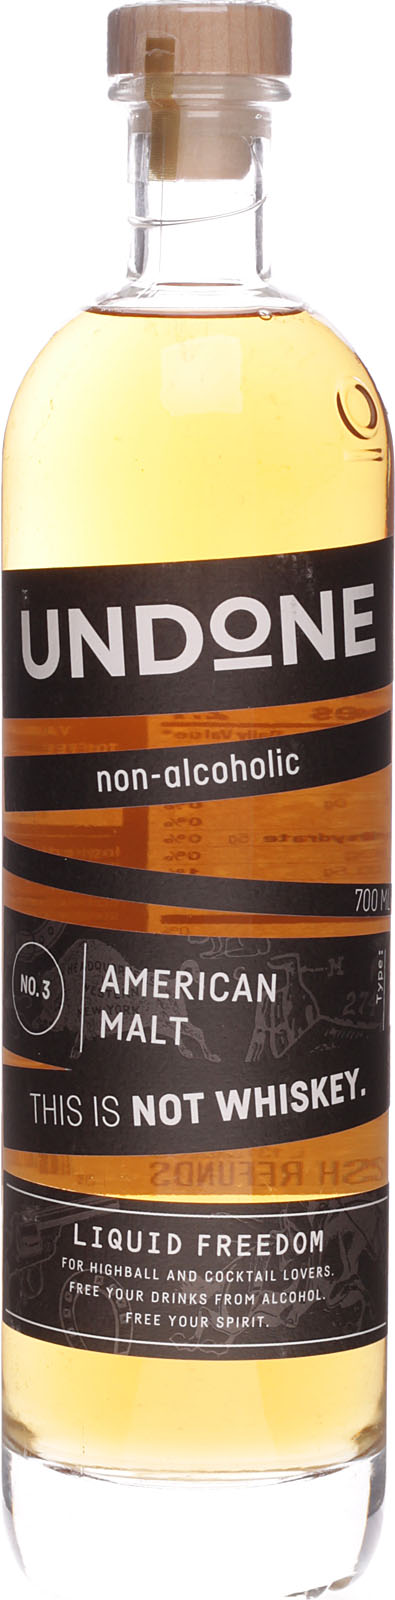 American 3 Malt Whiskey No. Not uns Sho Undone - im bei